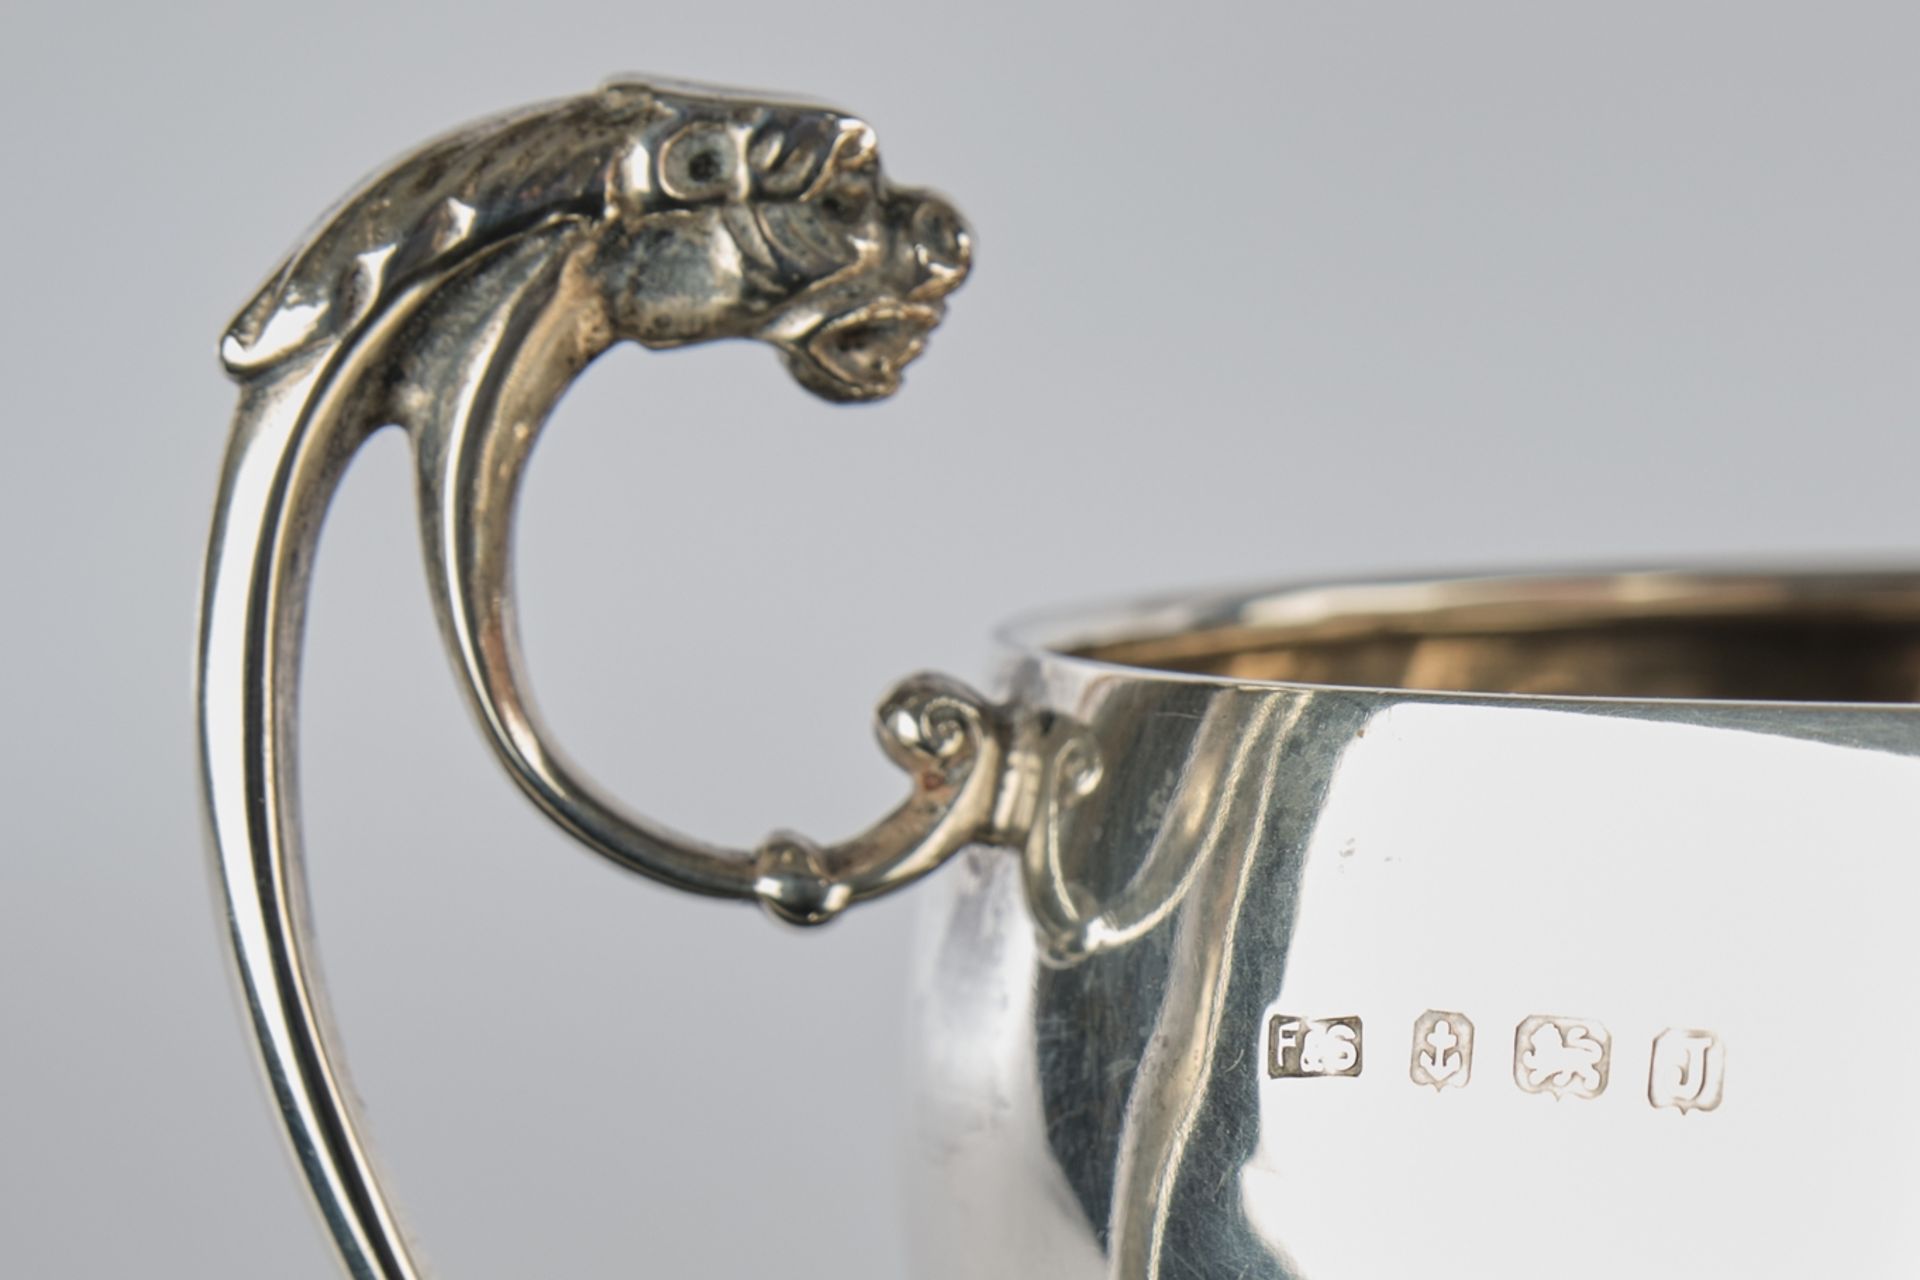 Foot bowl, silver 925, Birmingham, 1933, F. Fattorini & Son Ltd, goblet-shaped, two raised handles  - Image 2 of 2